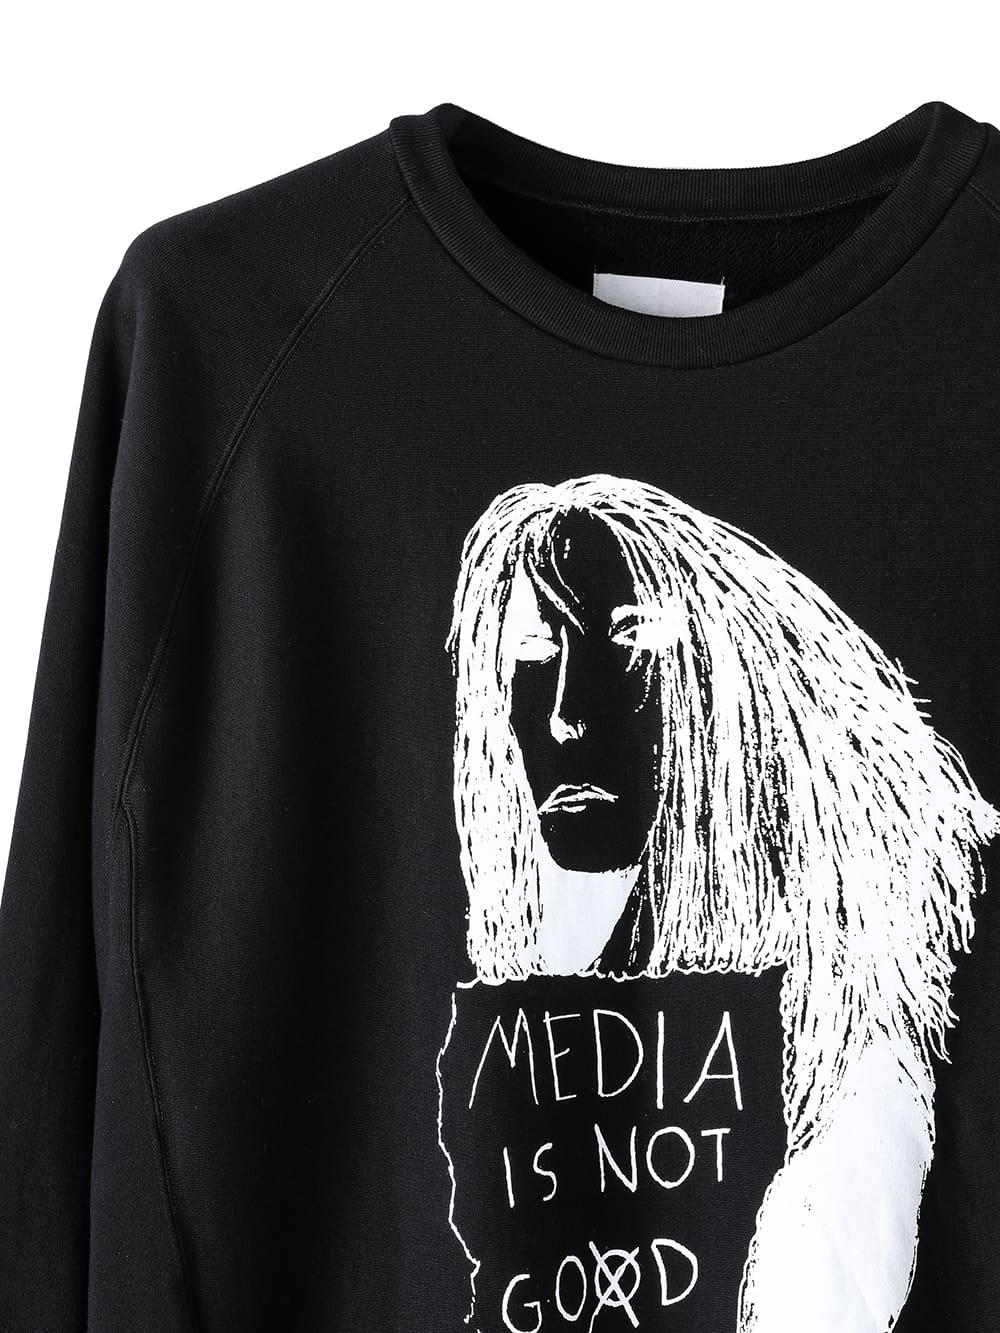 soc.0006SS23_black media is not go⨂d. type 1 (oversized hoodie